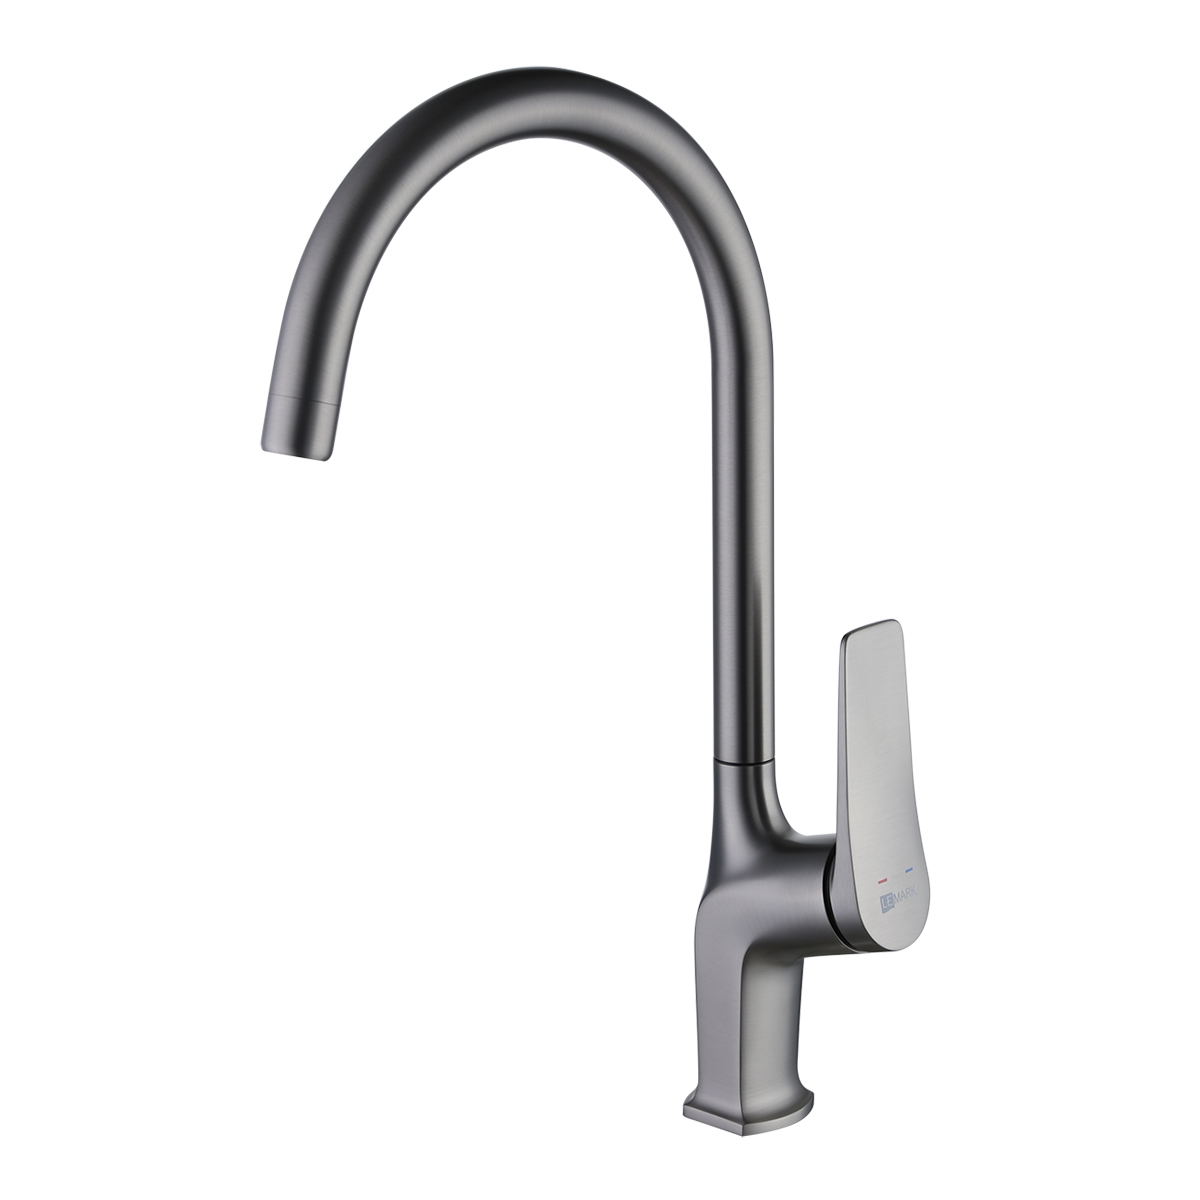 LM3705GM Kitchen faucet
with swivel spout